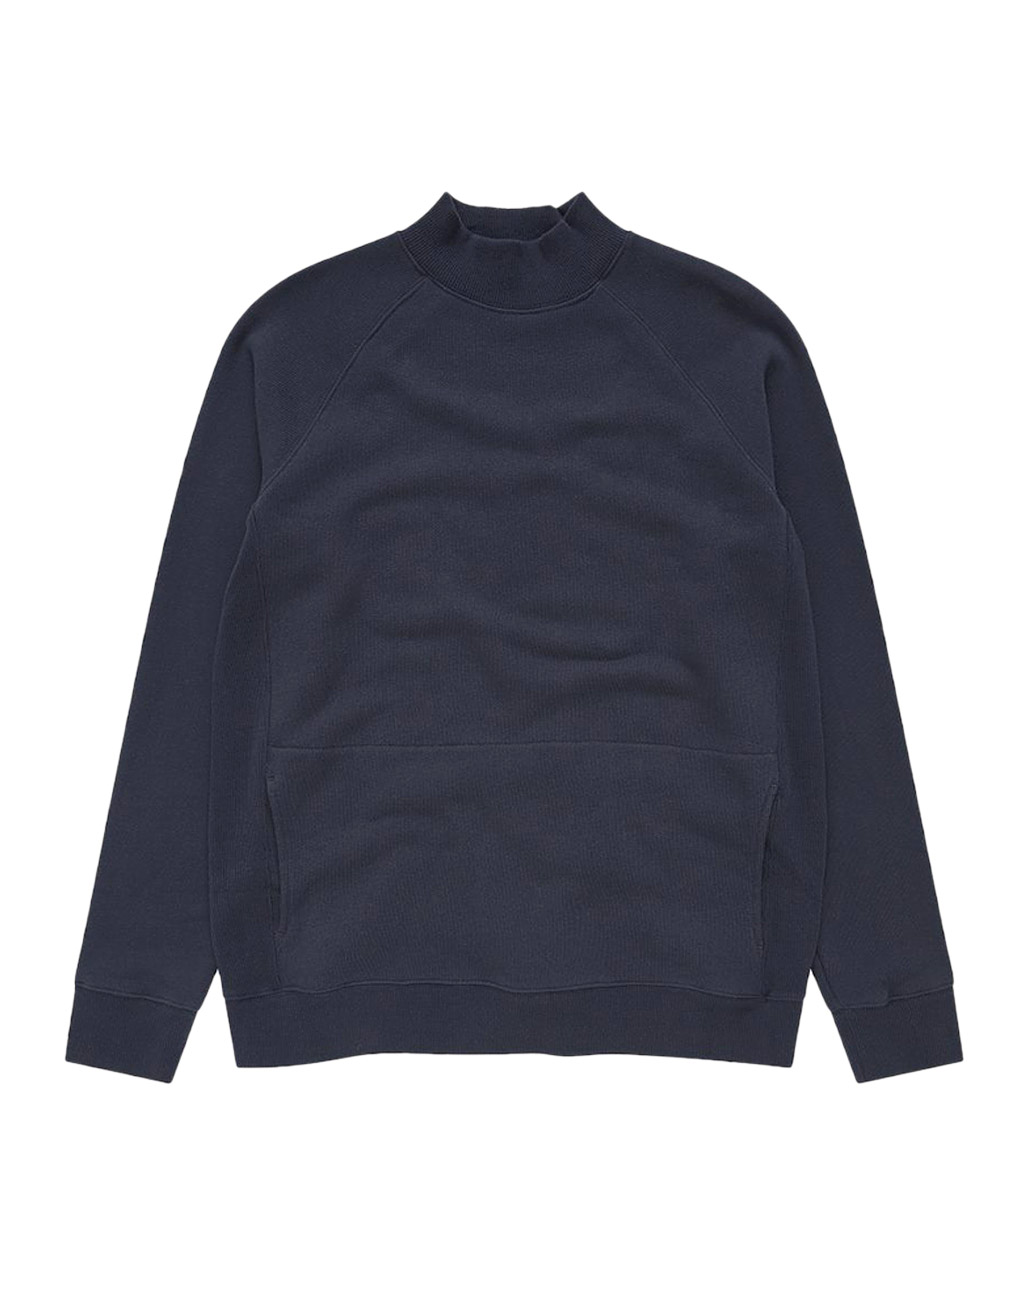 You Must Create – Touche Pocket sweatshirt navy